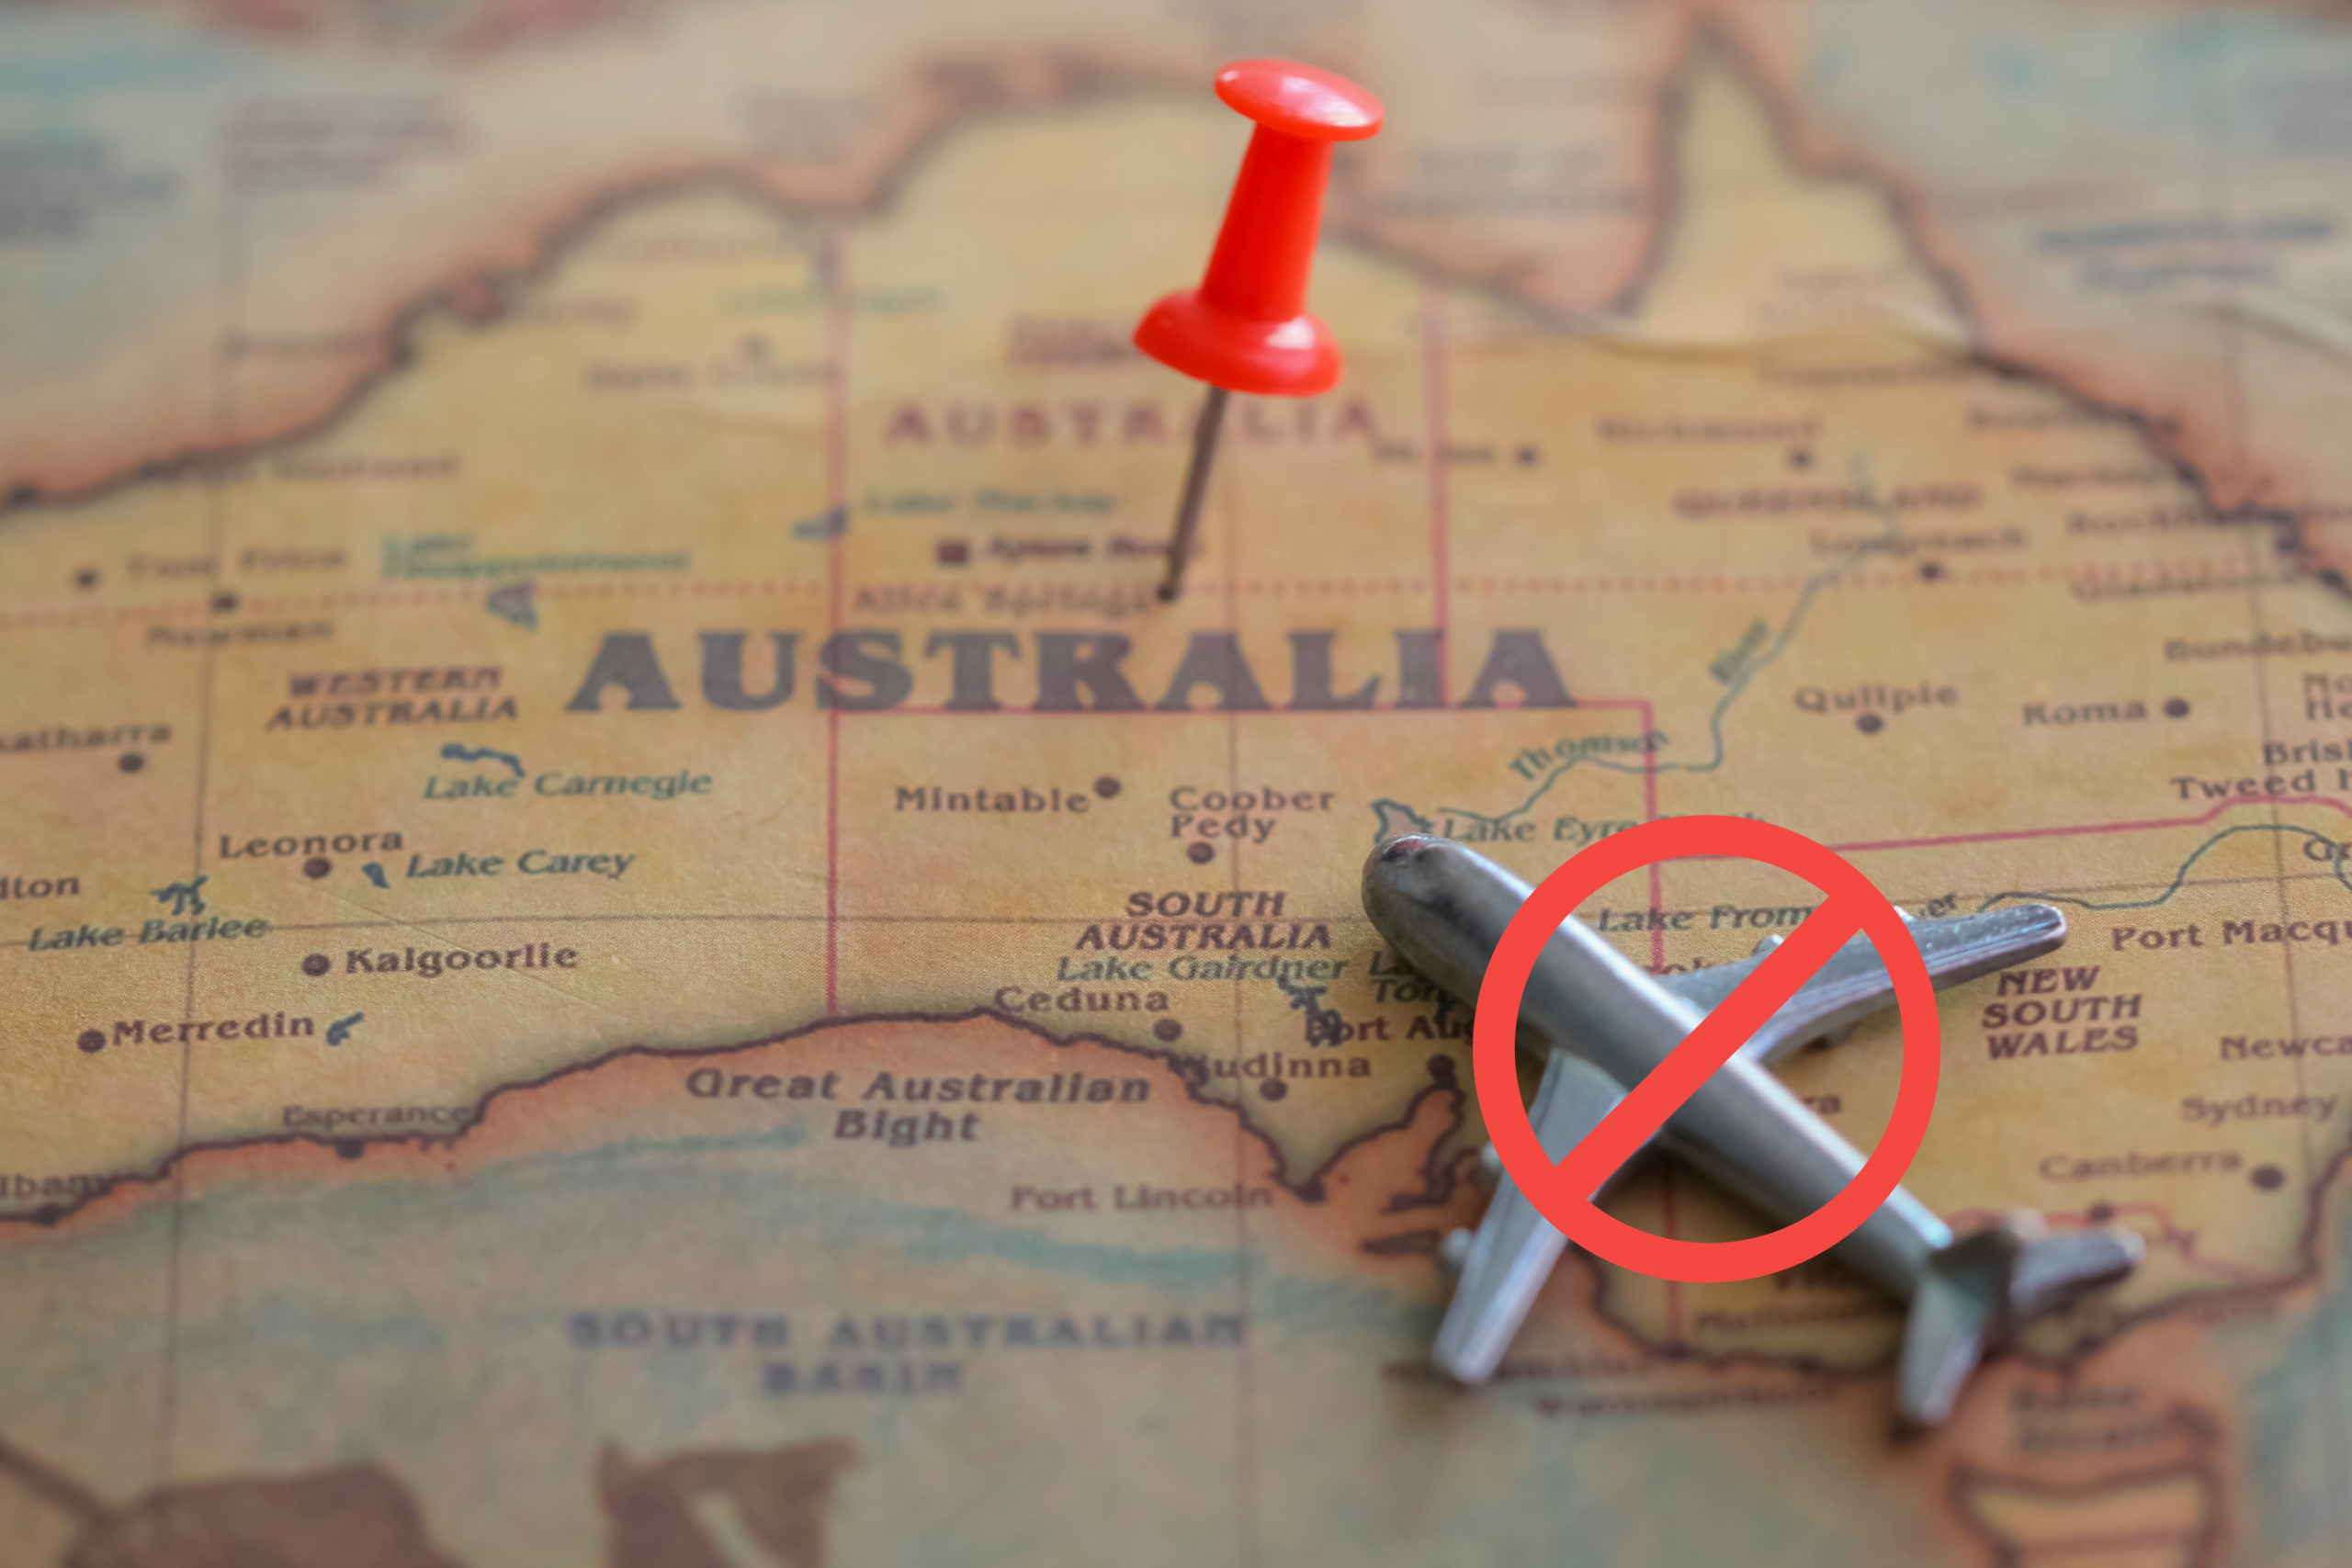 western australia travel restrictions update